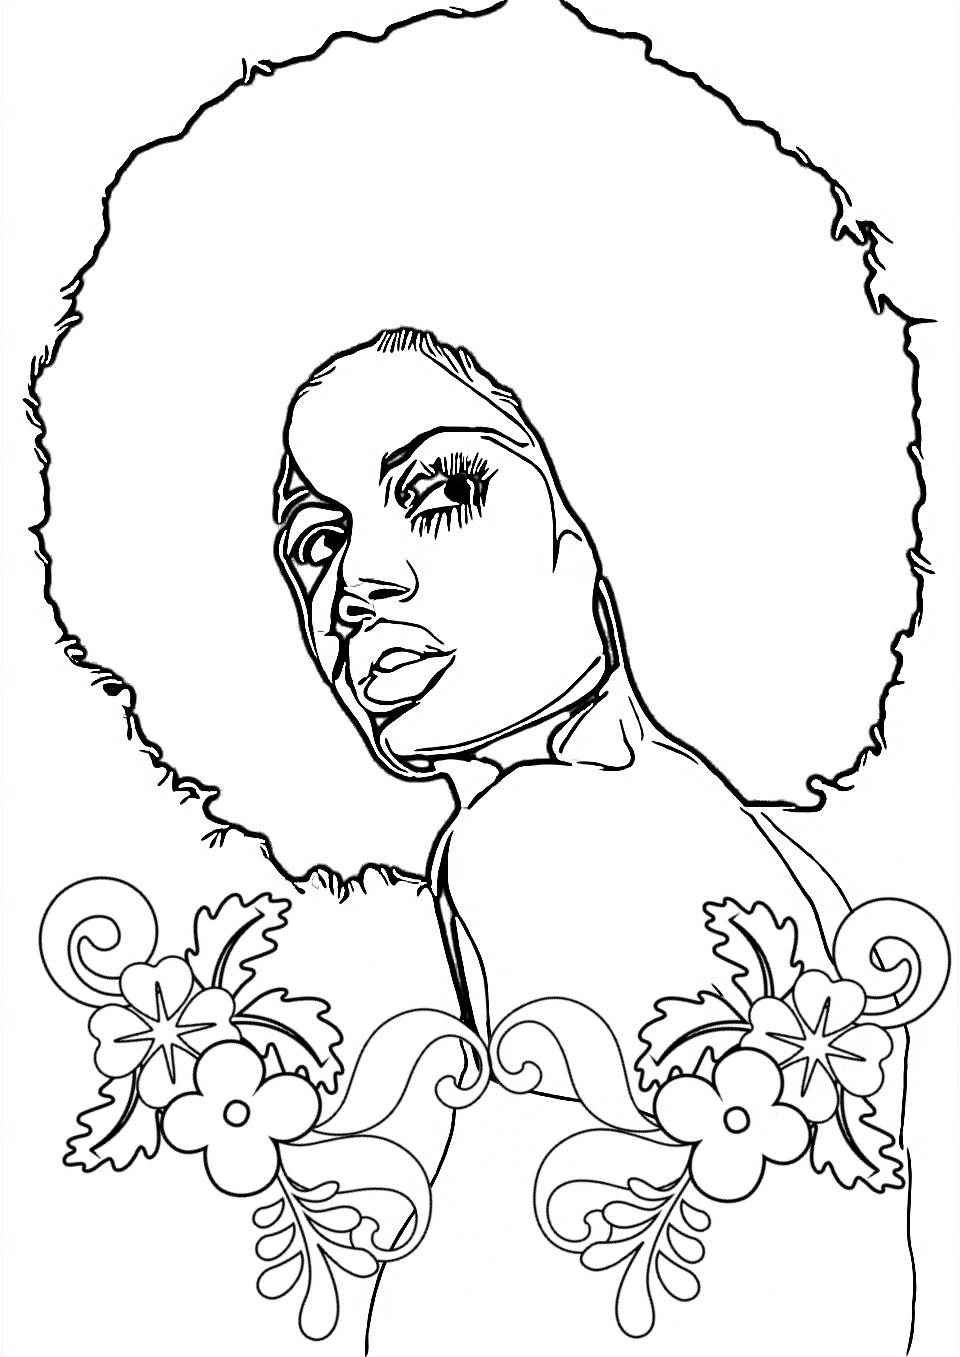 Glorious Afro, Beautiful Woman Coloring Page Coloring Page. Itsostylish.com